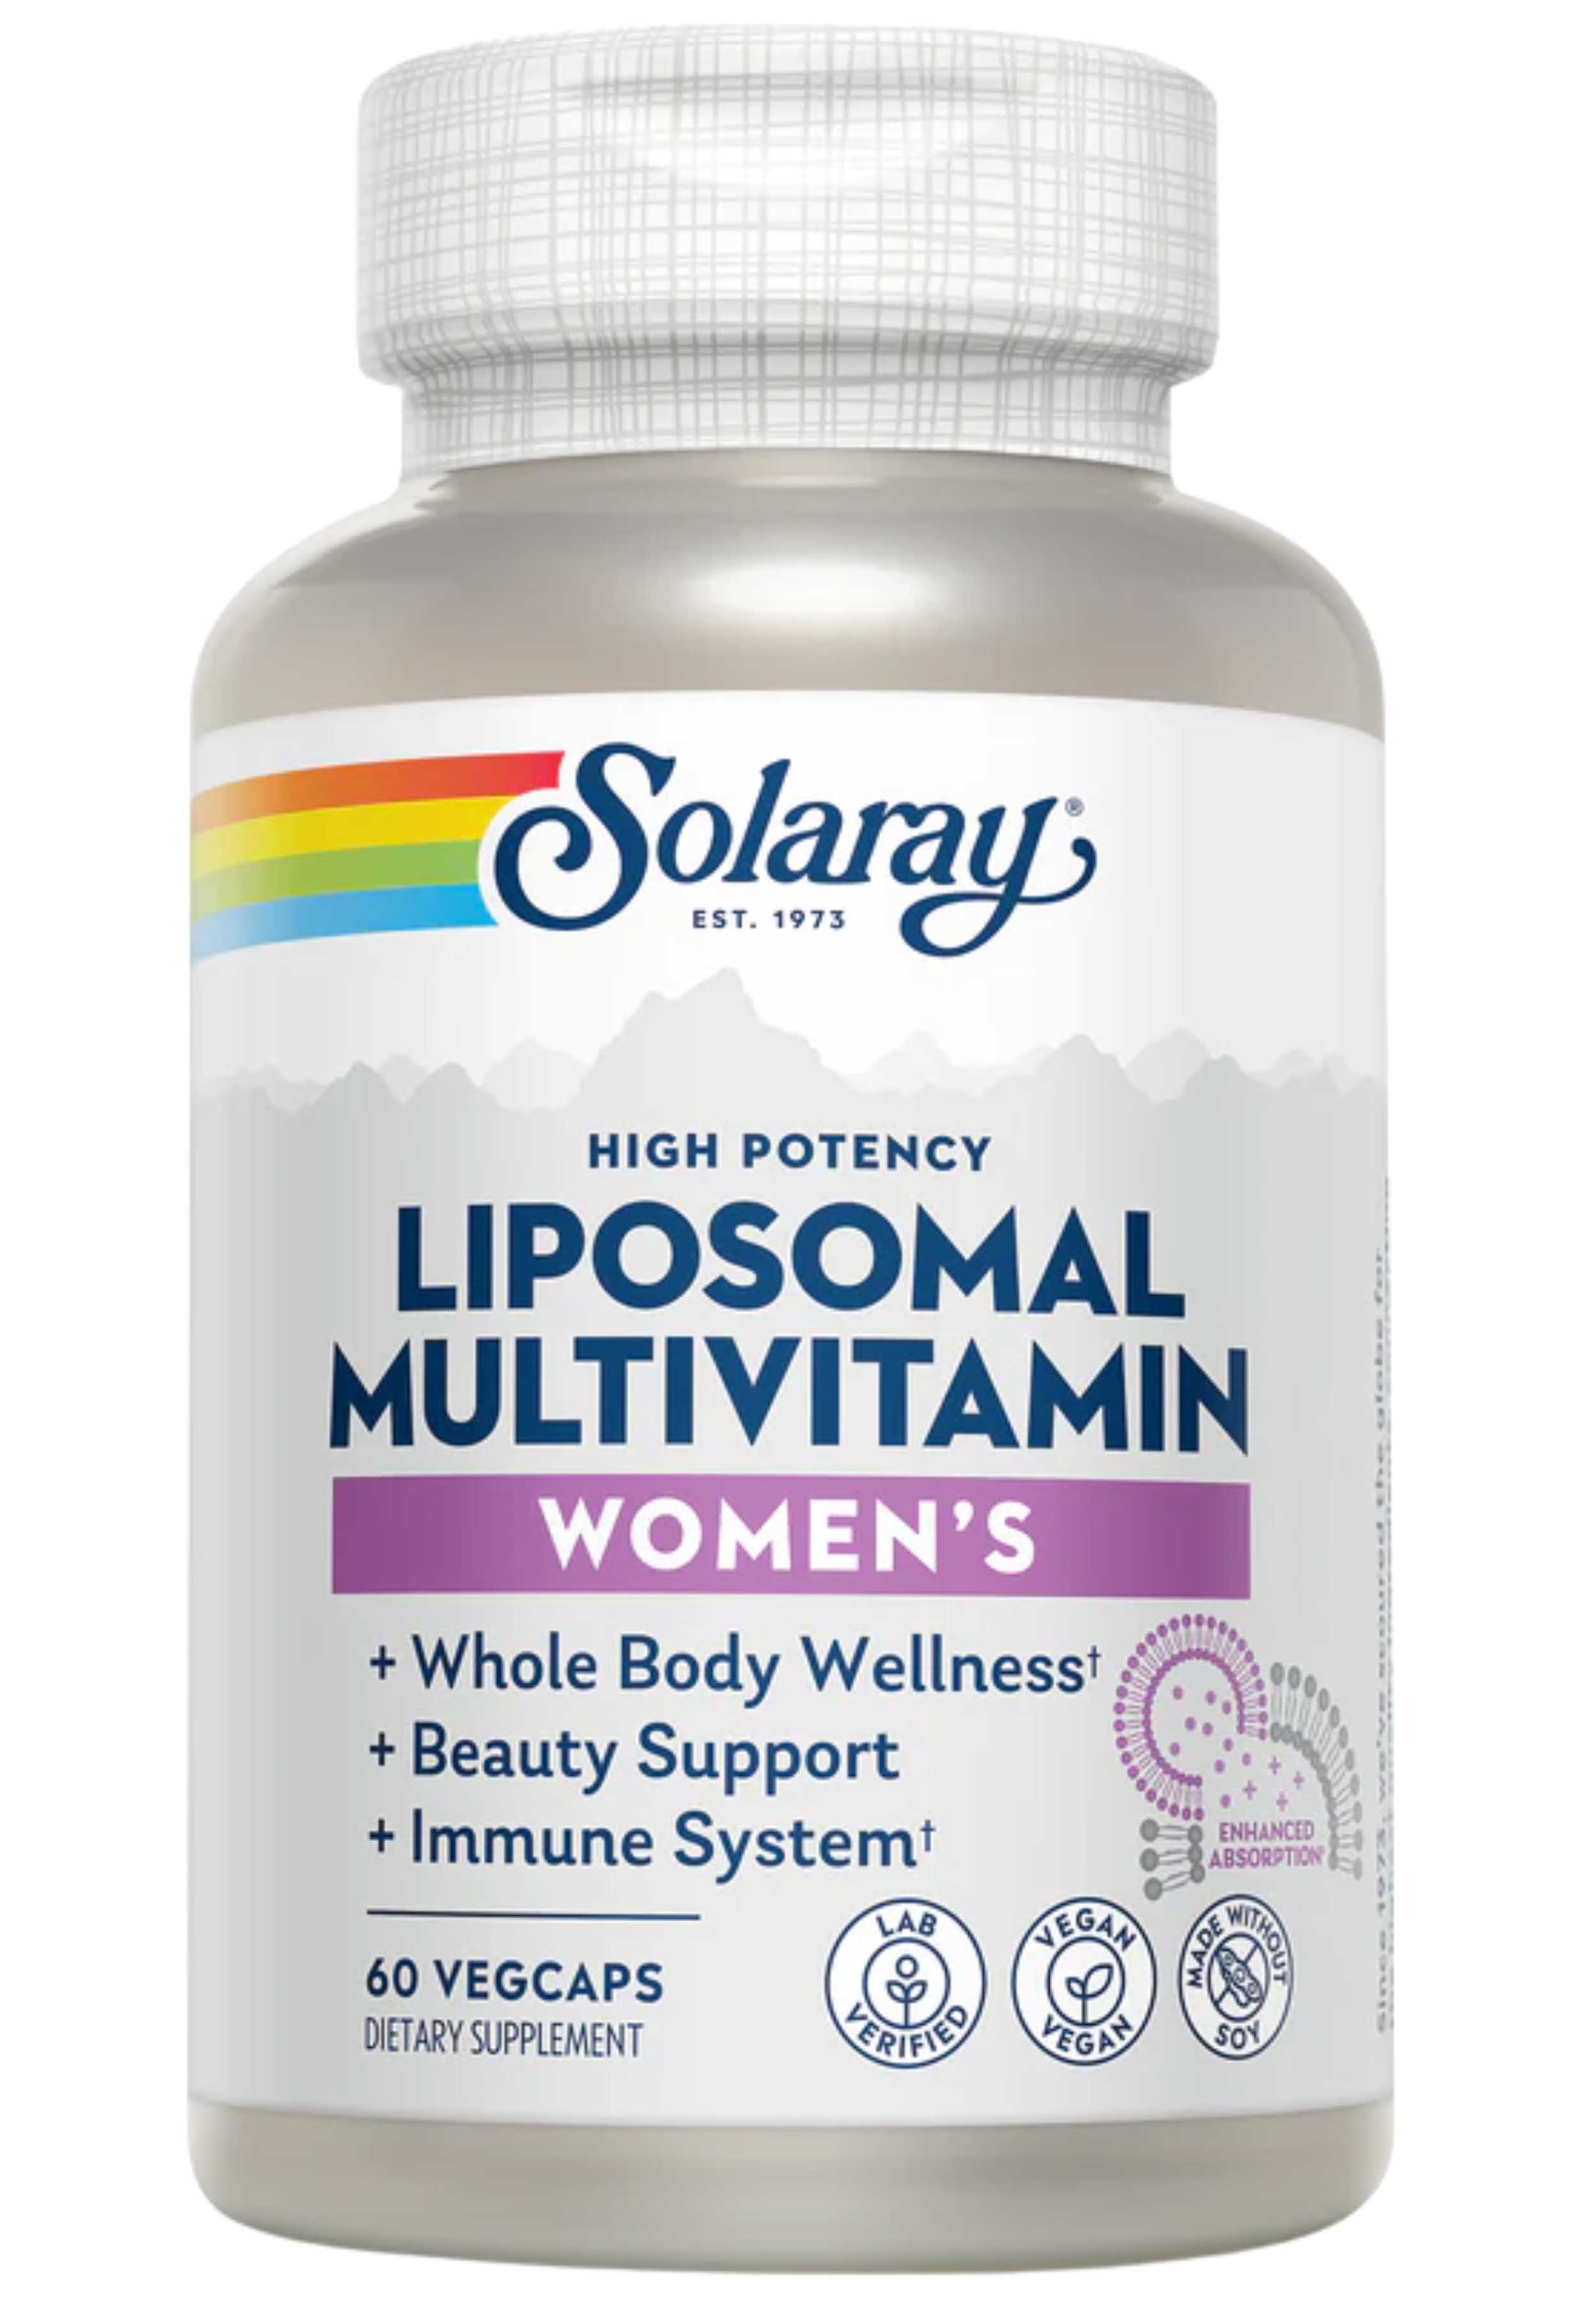 Solaray Liposomal MultiVitamin Women's